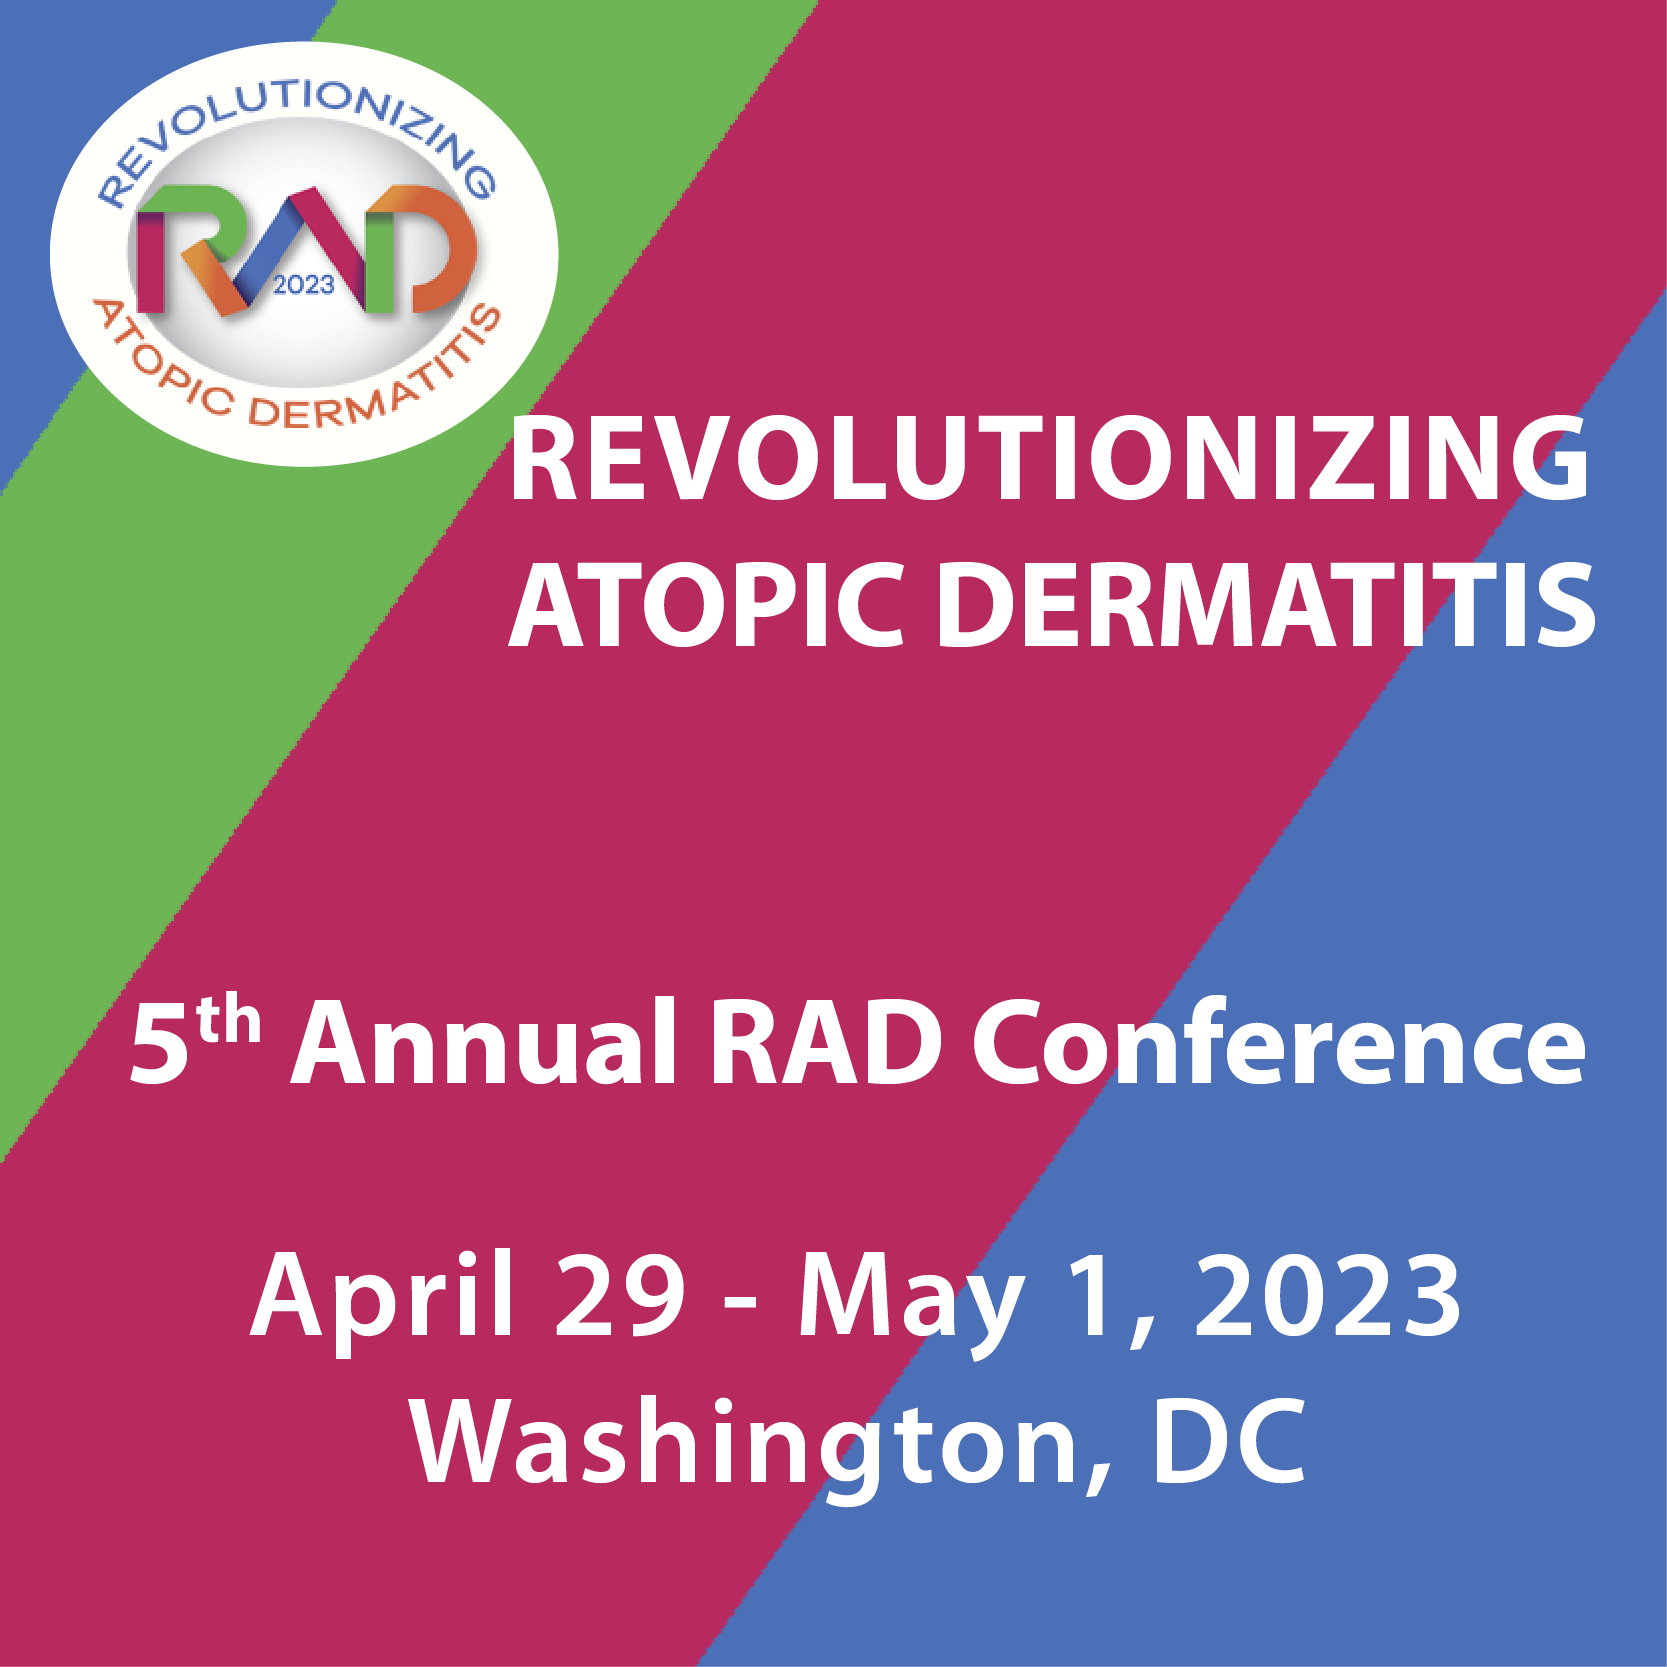 Medflixs 5th Annual Revolutionizing Atopic Dermatitis Conference